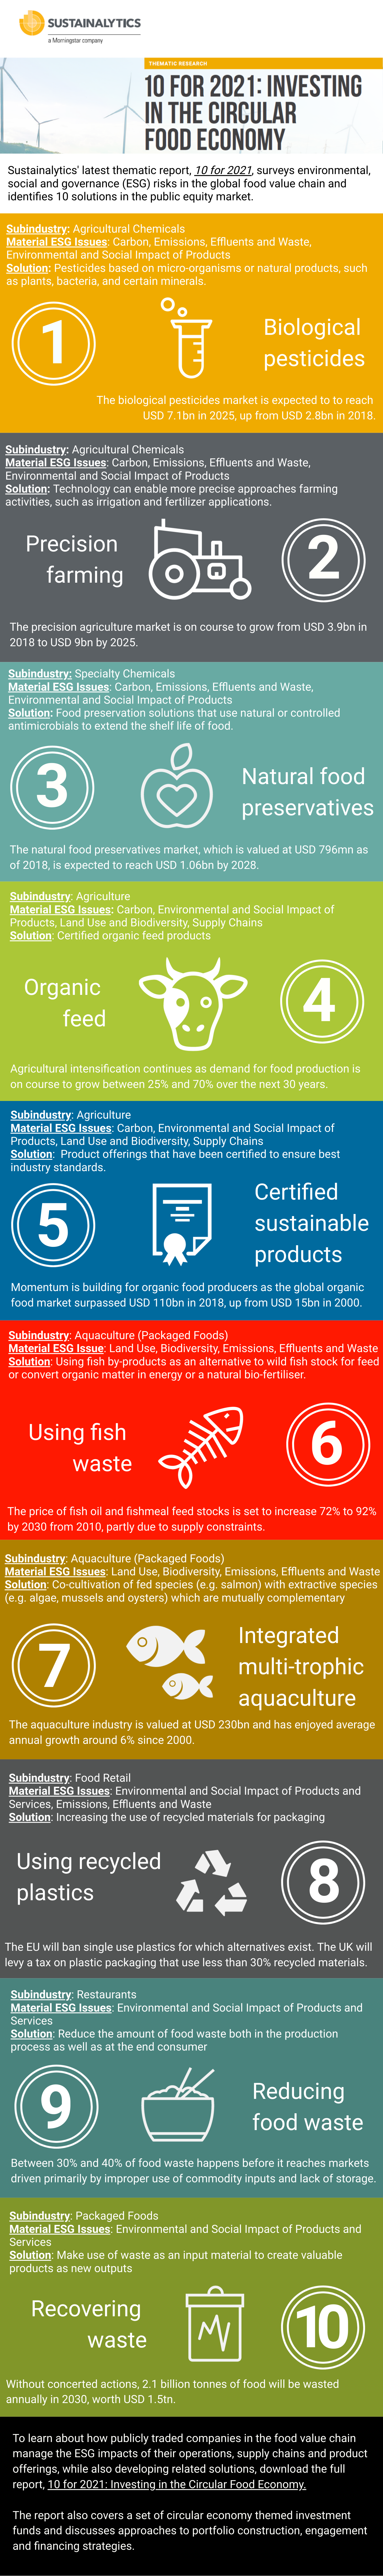 Sustainalytics 10 for 2021 infographic